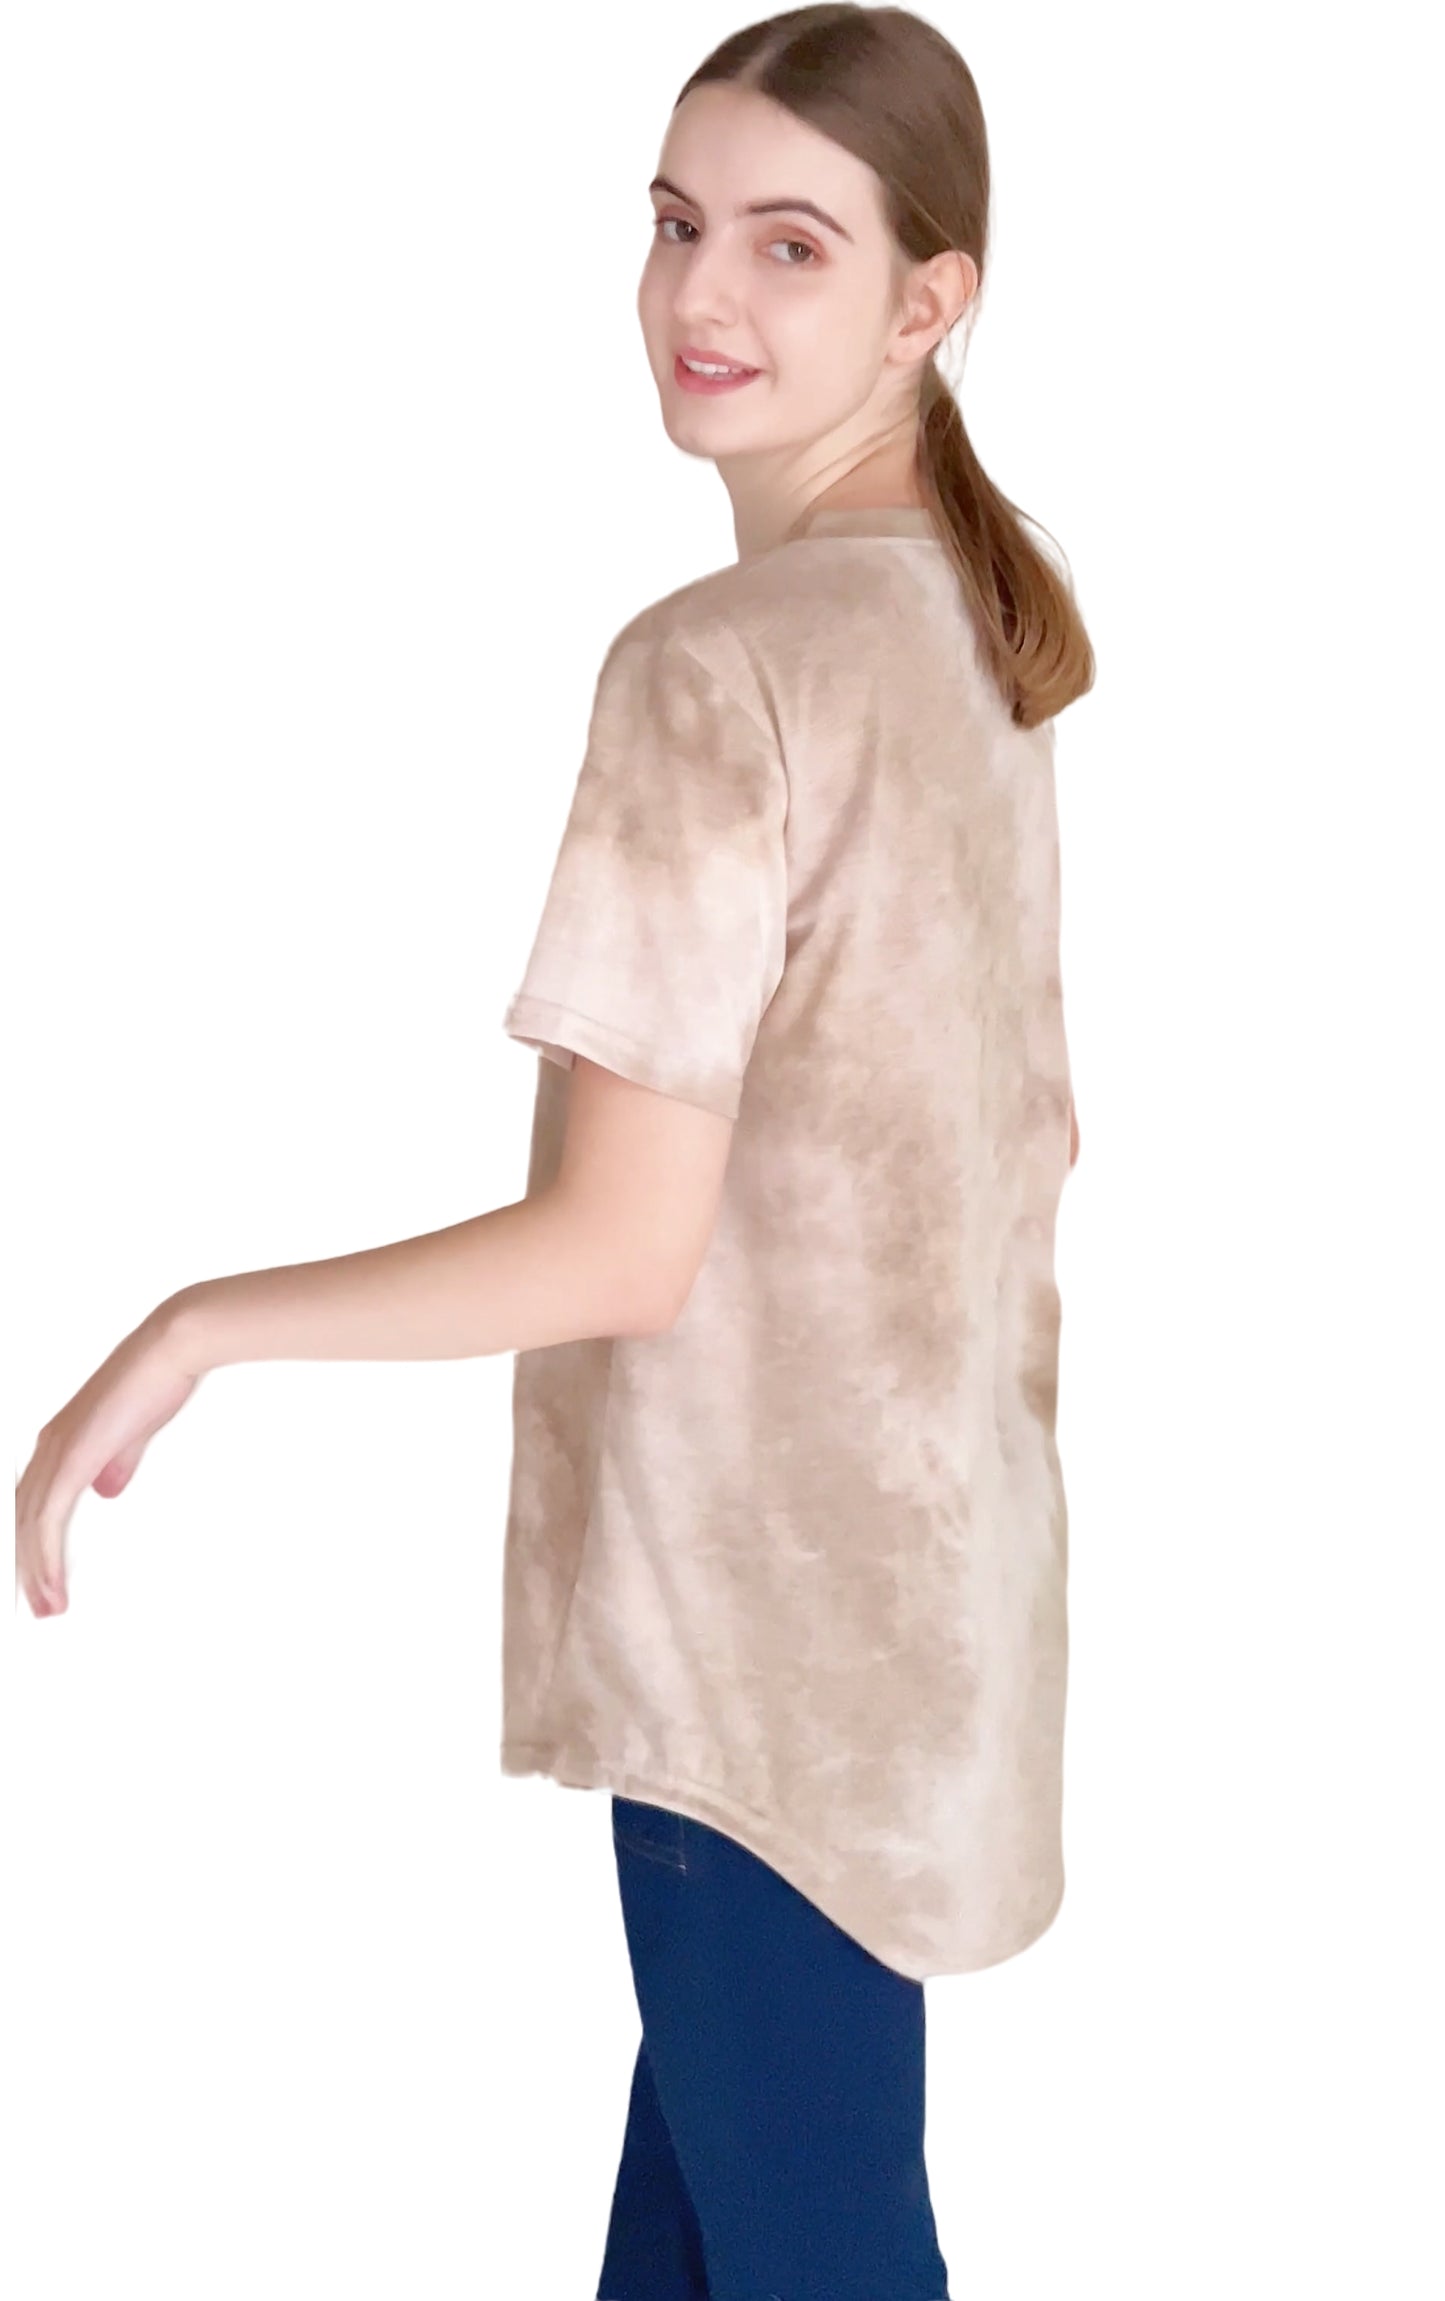 NEEINGO Women's Short Sleeve V Neck Loose Fit Maternity Shirt Hip Length Shirt Top with Mocha Tie Dye and HI LO Hem